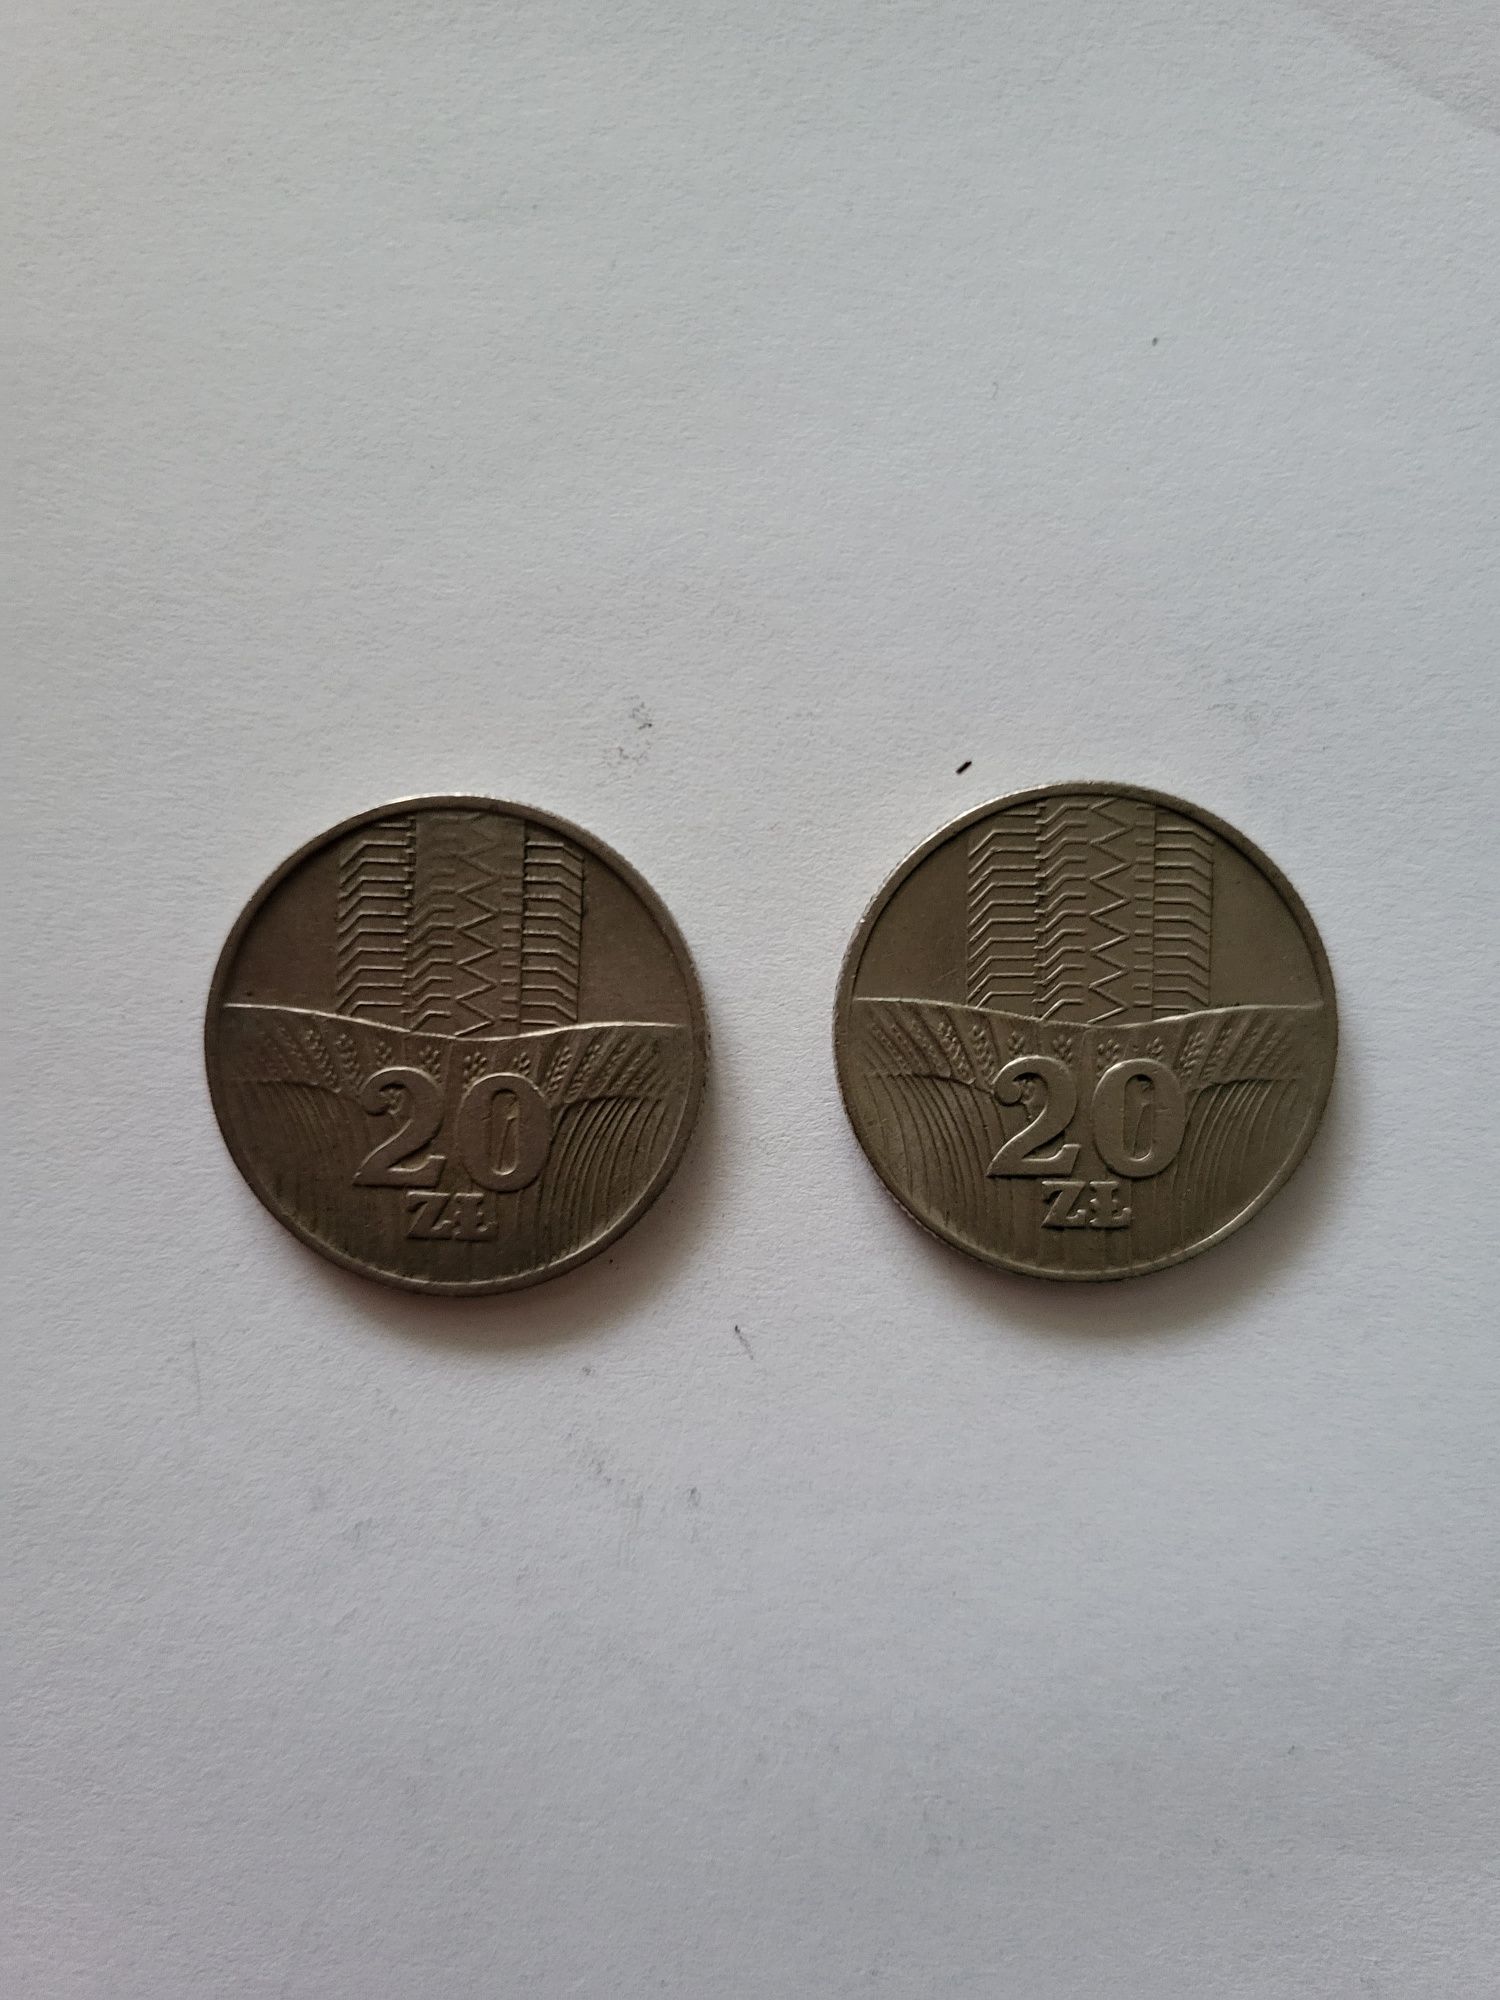 Moneta 20 zł z 1973 r i 1974r